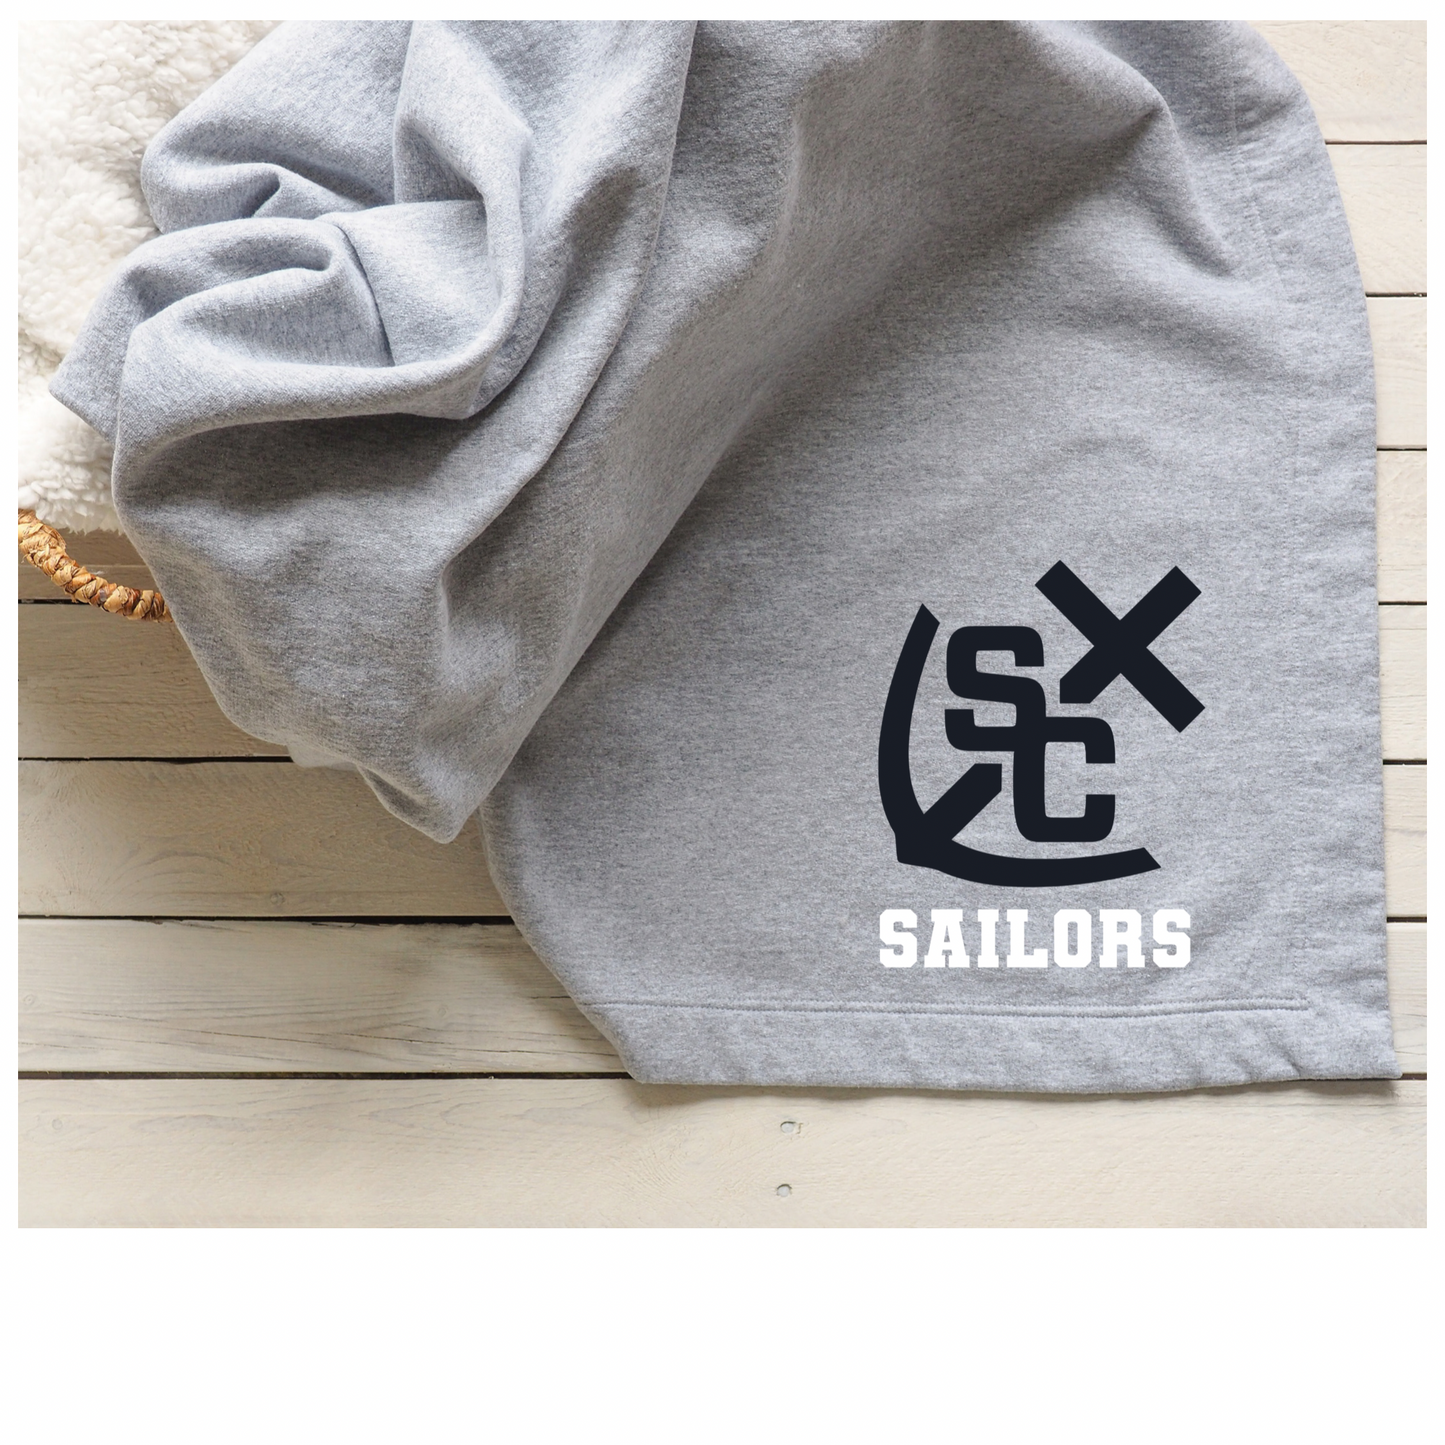 South Christian Sailors Fleece Blanket 50” X 60” - 3 colors